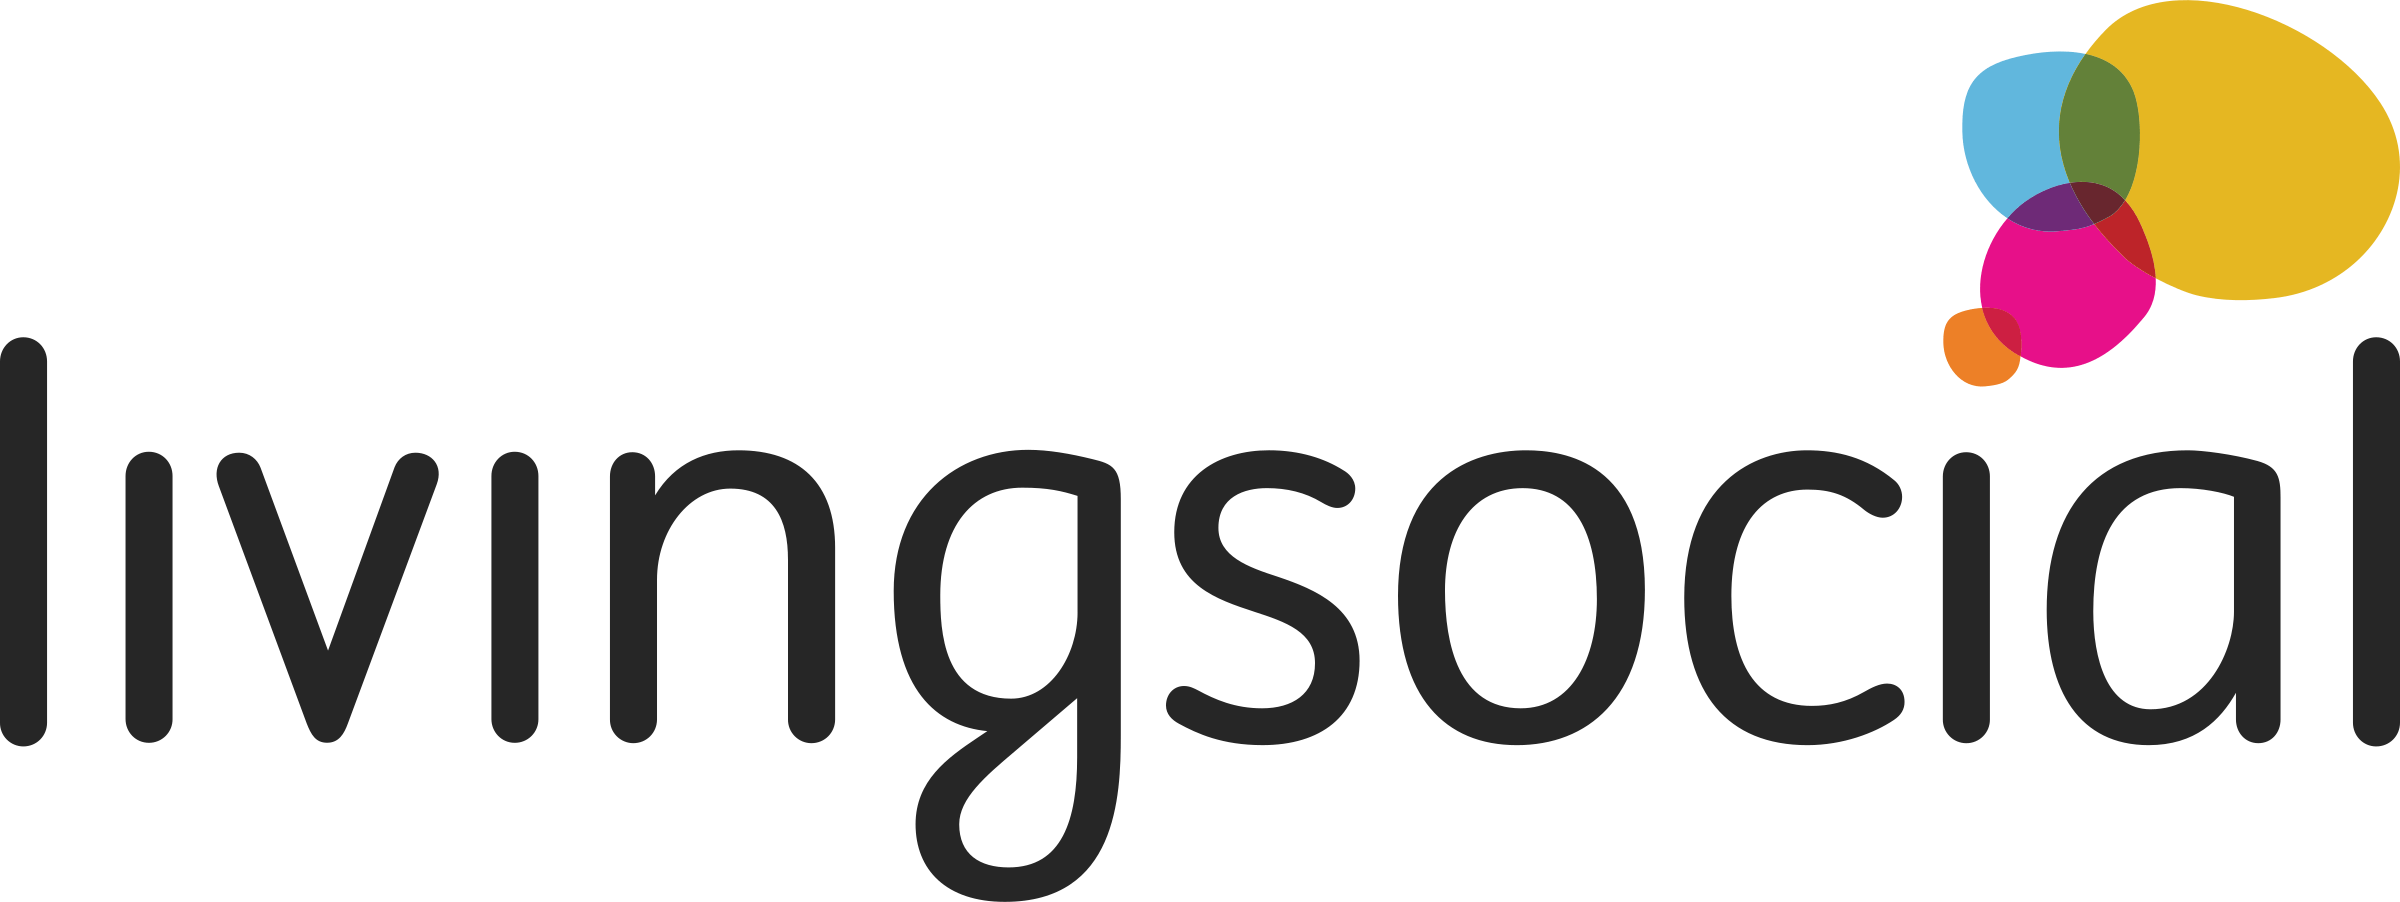 LivingSocial Logo - LivingSocial Logo PNG Transparent & SVG Vector - Freebie Supply